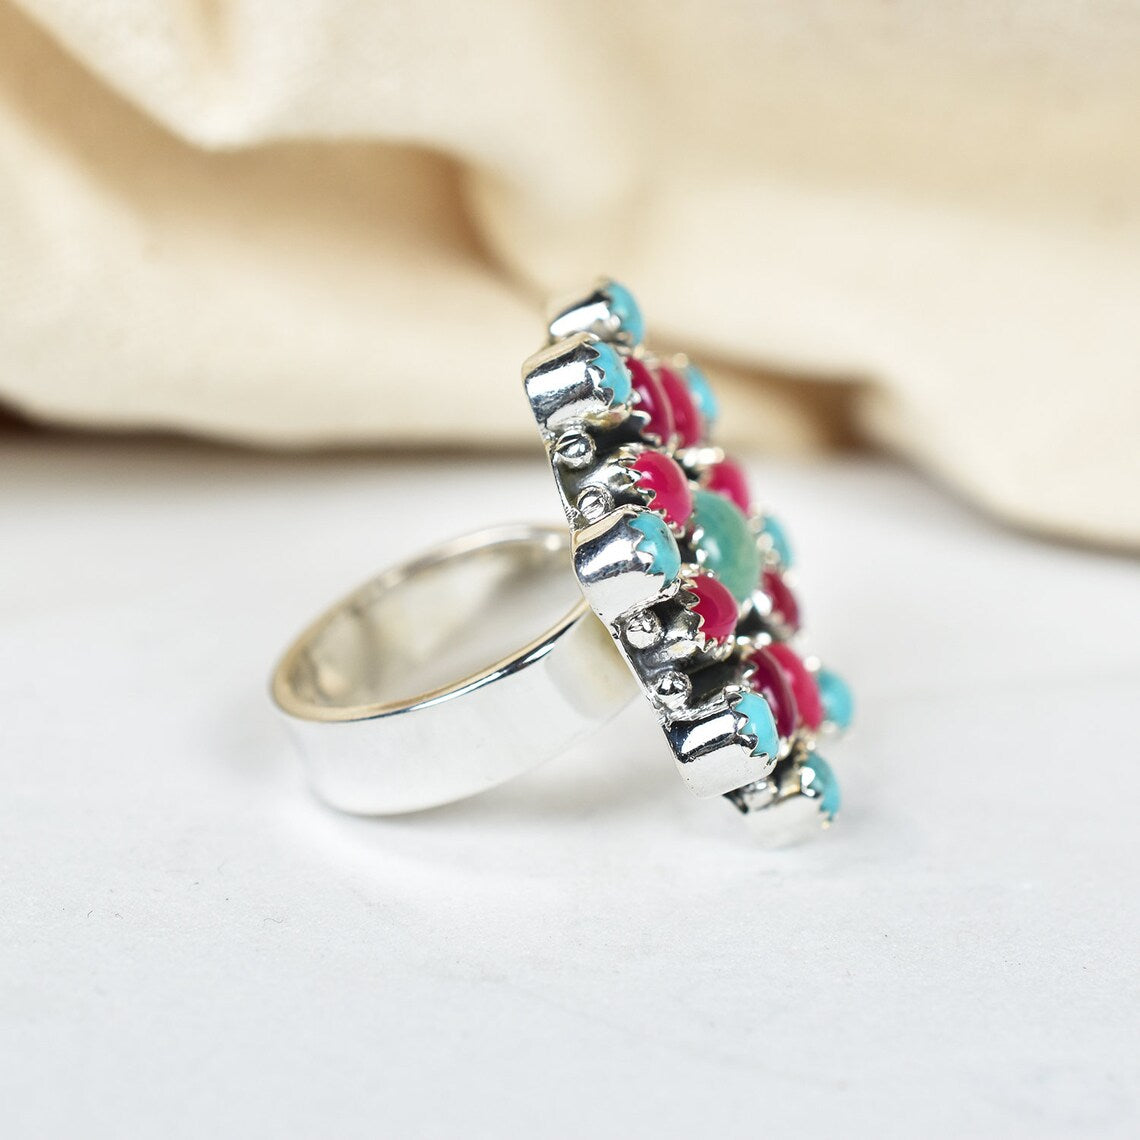 Native American Turquoise & Pink Onyx Cluster Rings - 925 Sterling Silver Handmade Vintage Rings